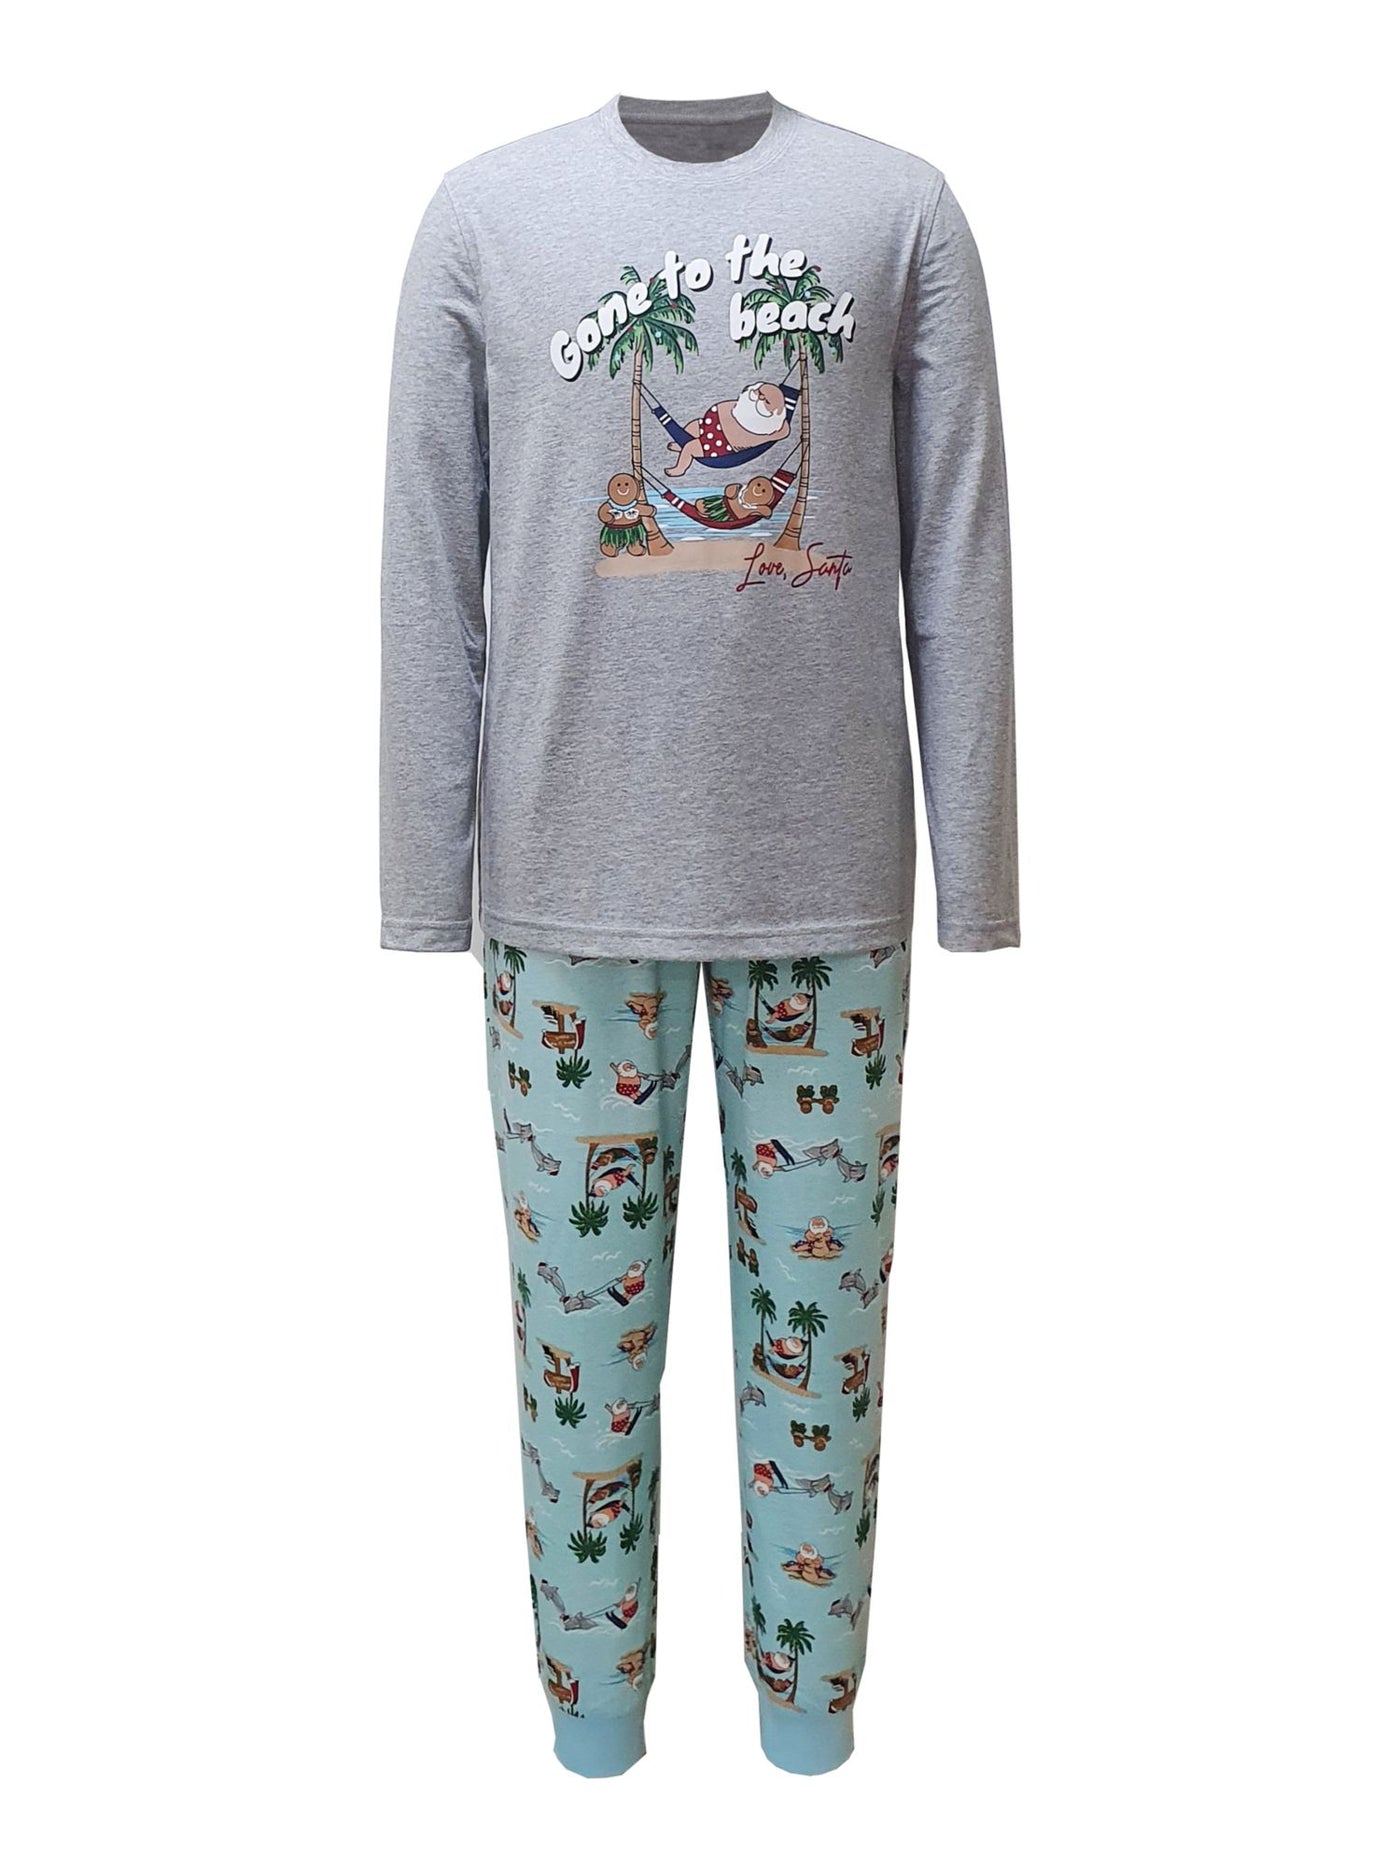 FAMILY PJs Mens Gray Graphic Long Sleeve T-Shirt Top Lounge Pants Pajamas XXL